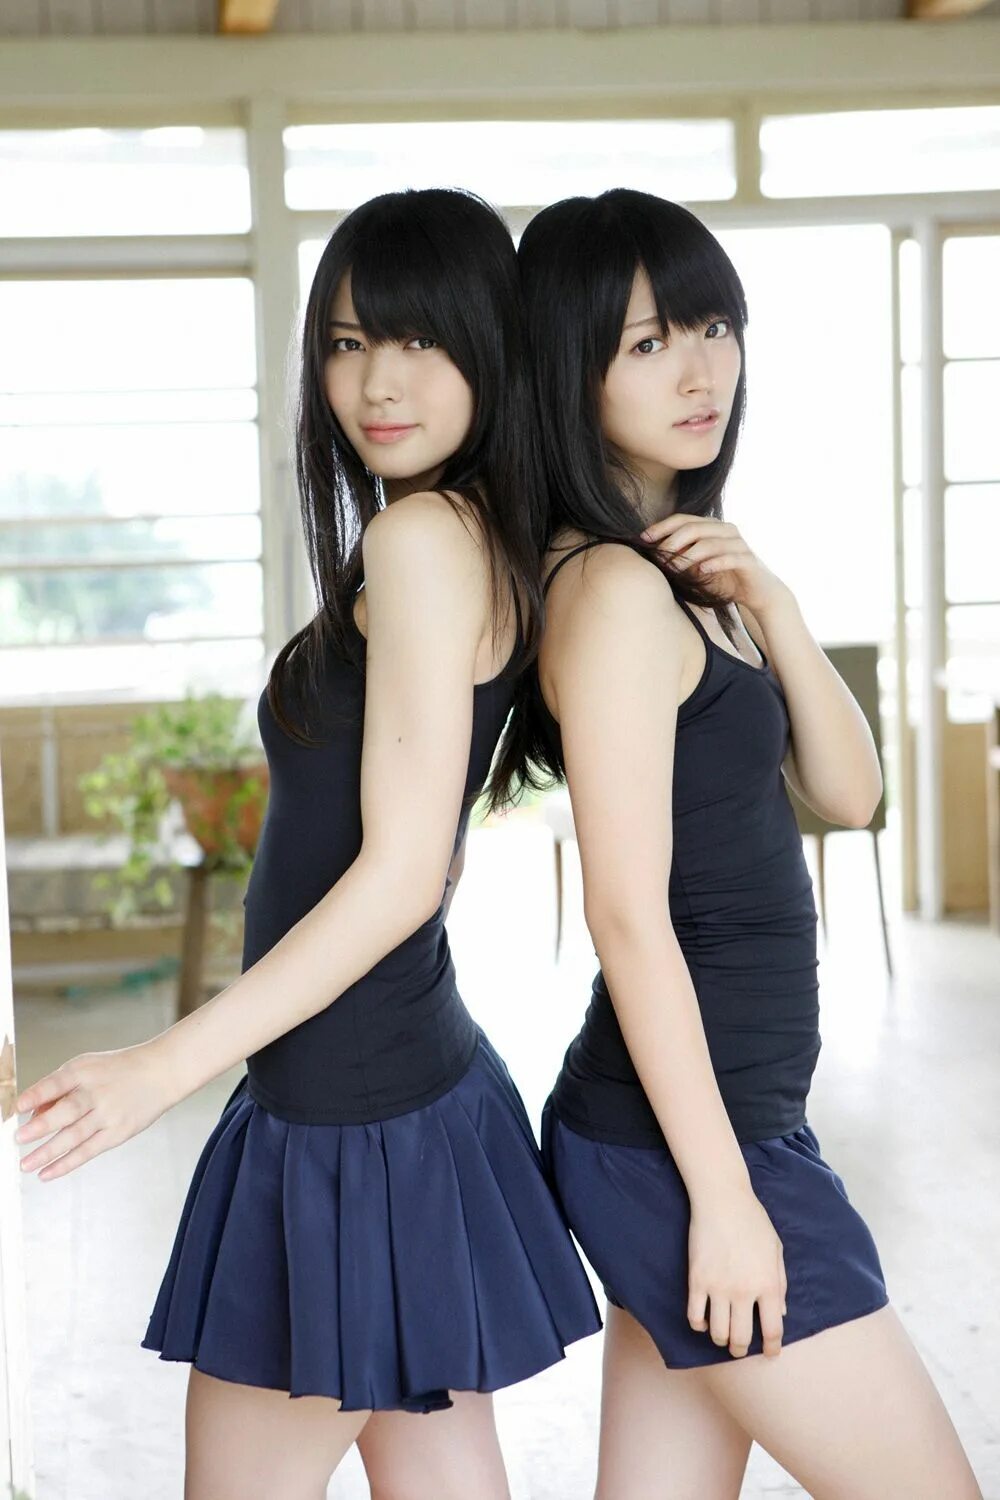 Airi Suzuki and Maimi Yajima. Азиатские близняшки. Азиатские Близнецы. Японские сладкие девочки.